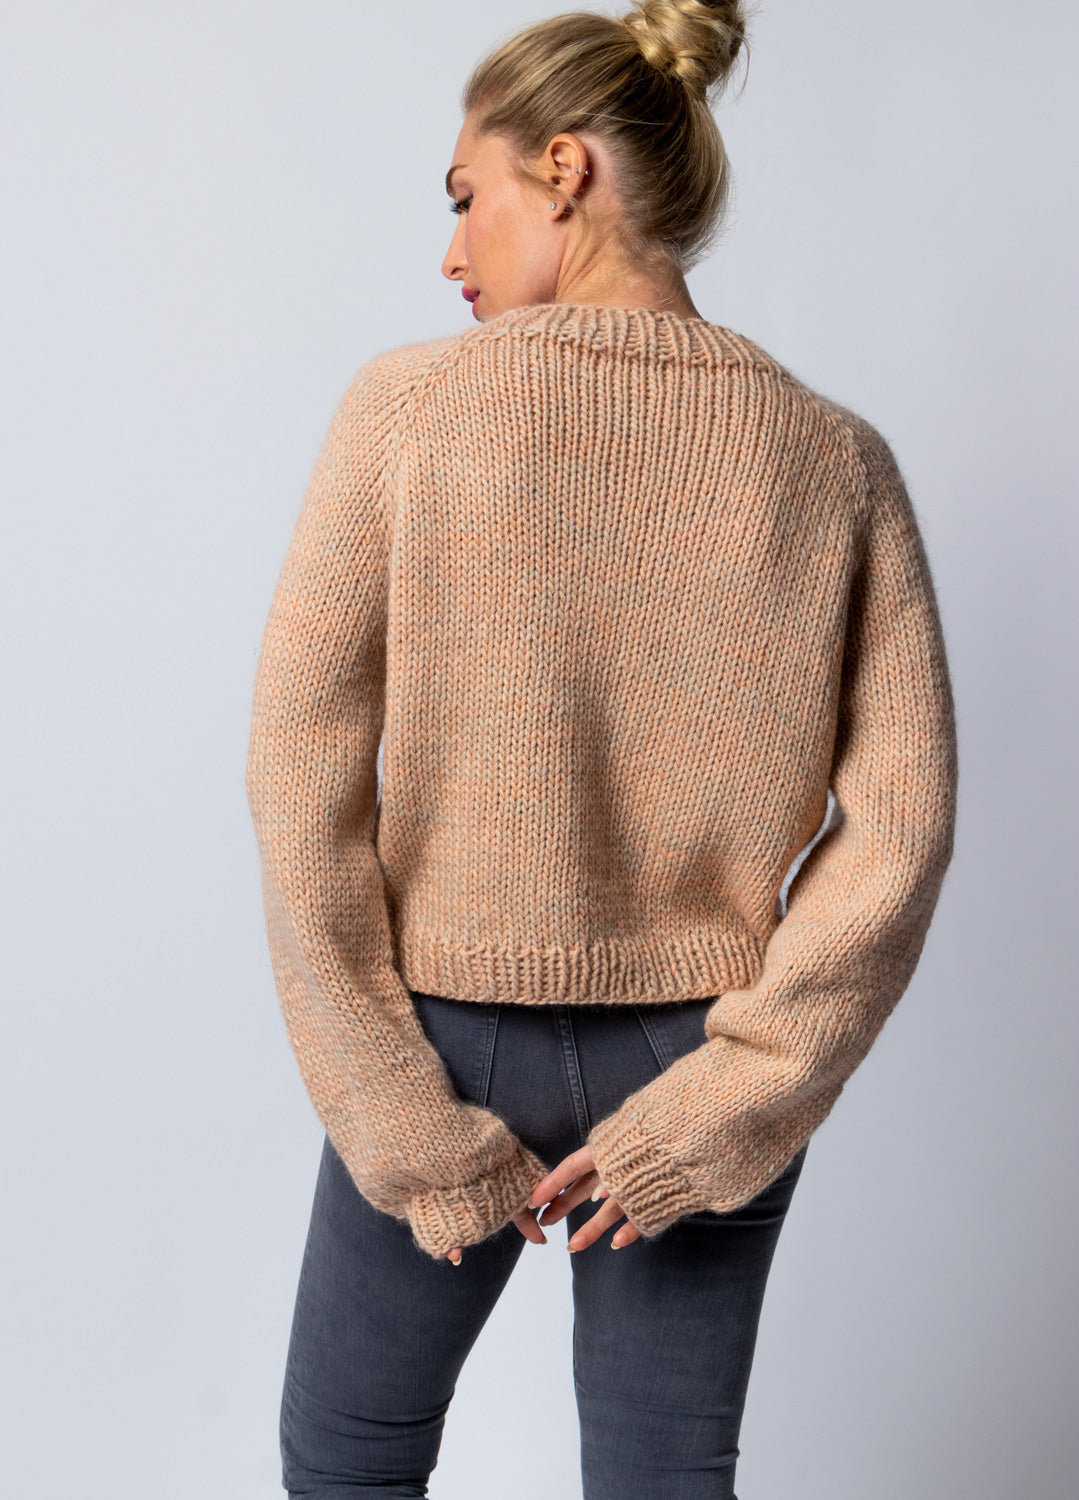 Maracuya Sweater Kit